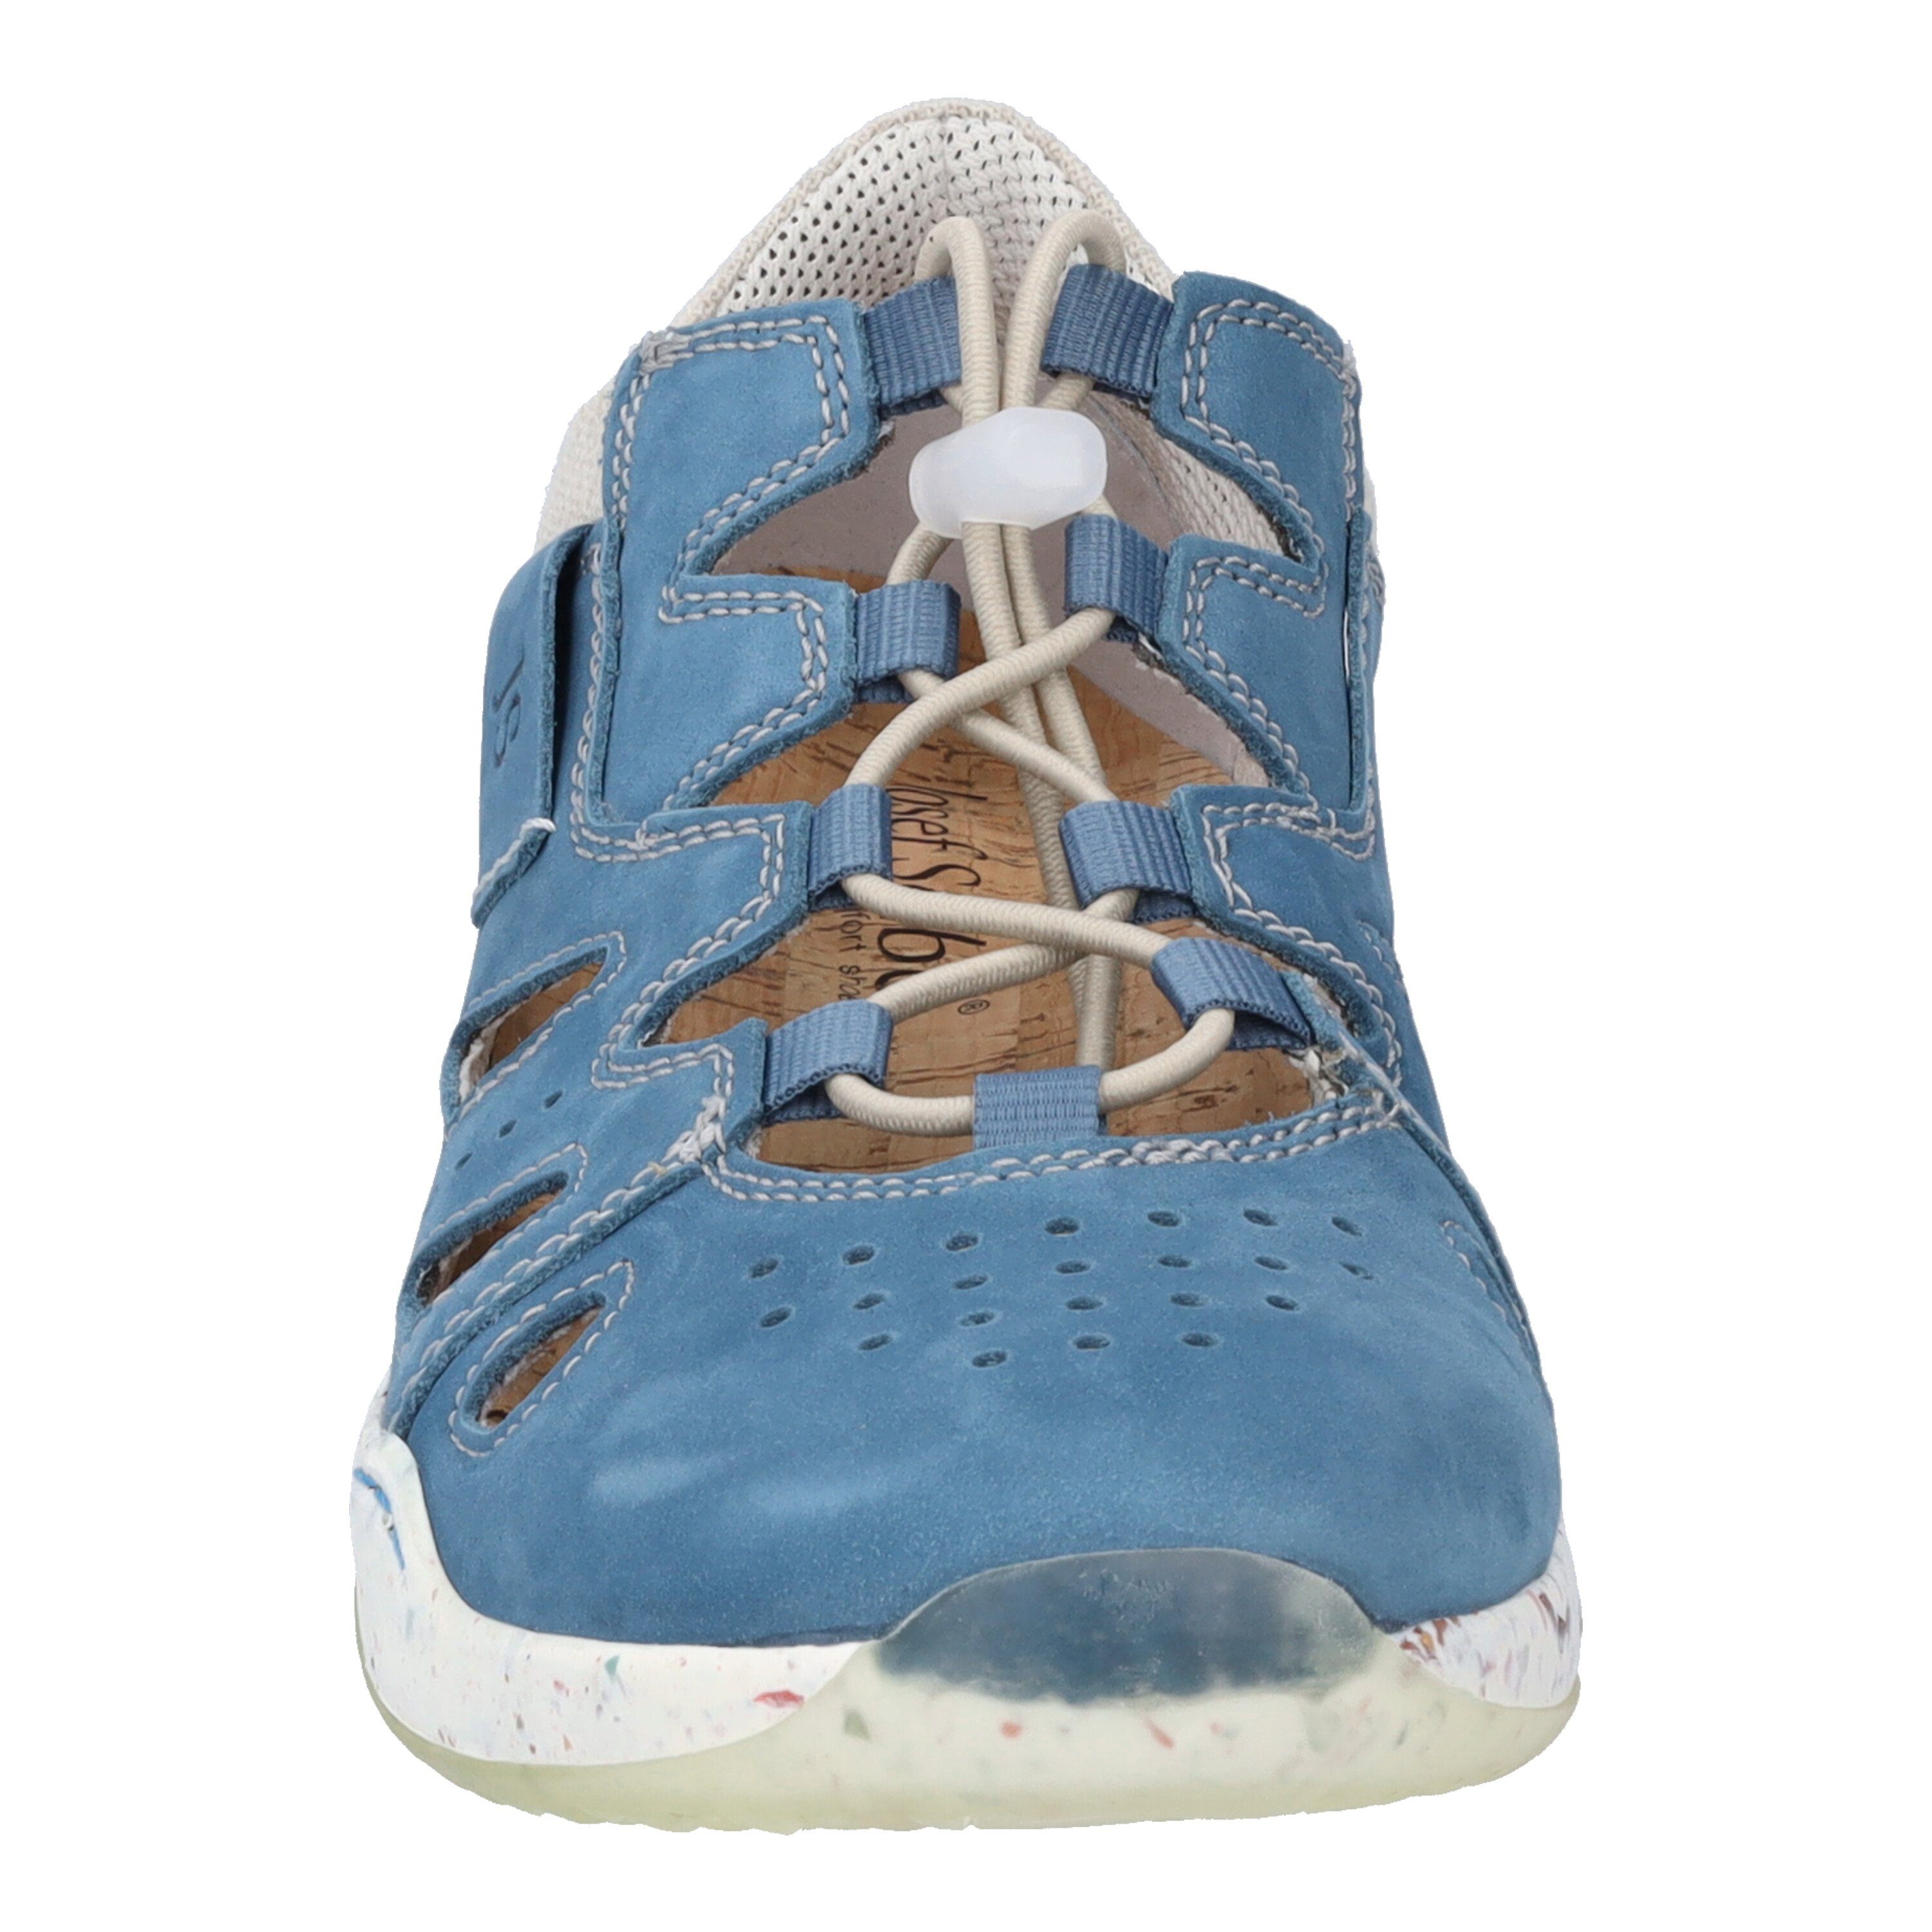 Sneaker blau-kombi Josef blau (10201667) Seibel Ricky 17,